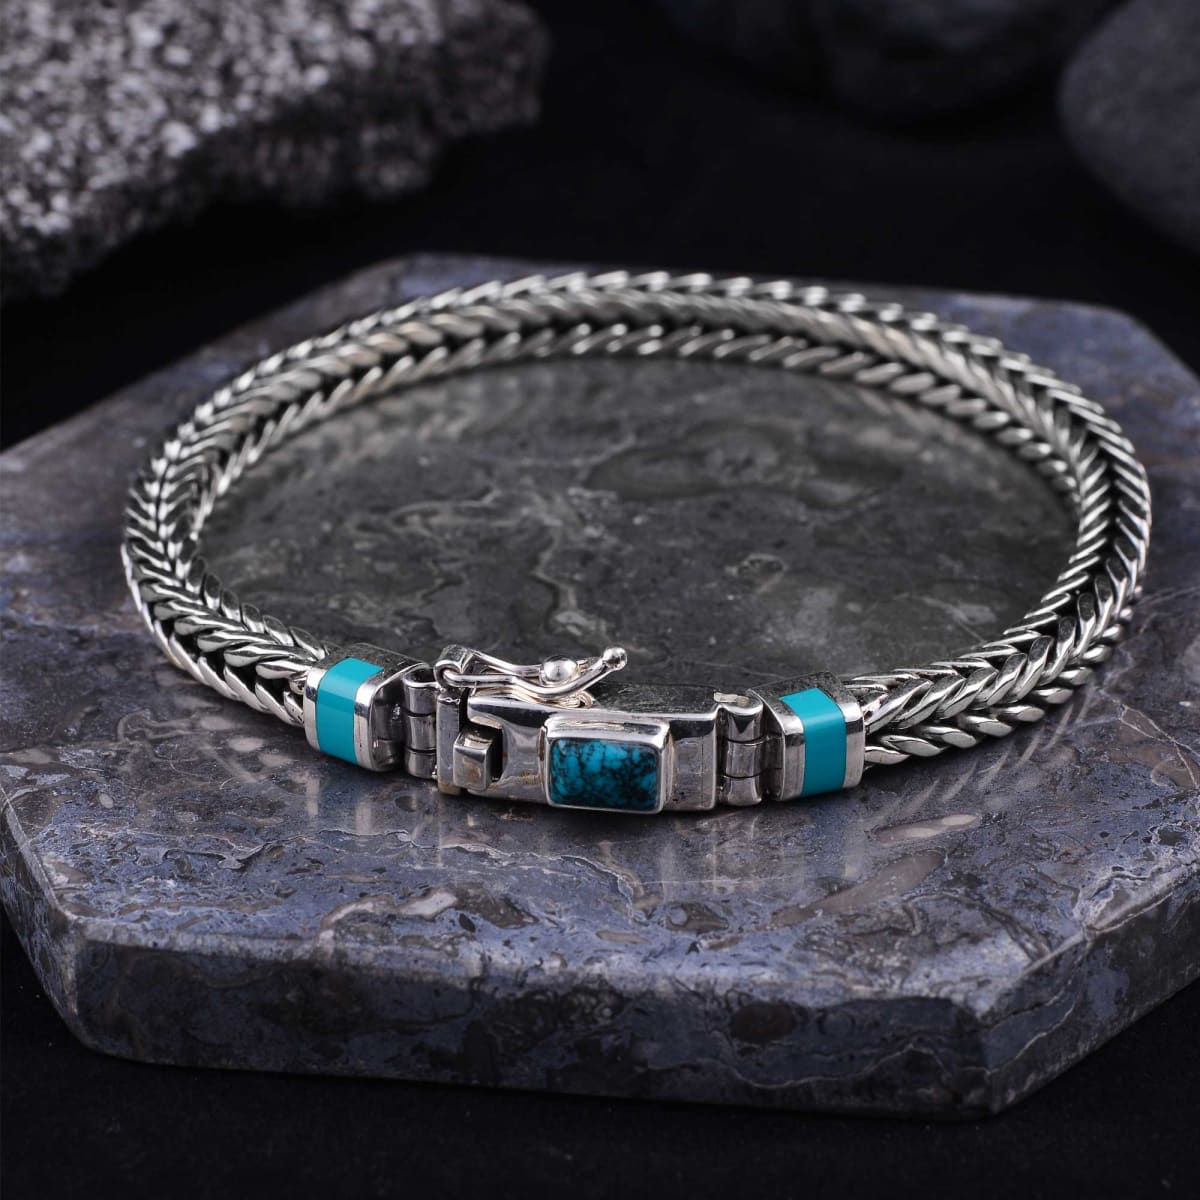 https://cdn.shopify.com/s/files/1/0256/0717/6266/products/mens-silver-chain-bracelet-byzantium-dragon-bones-turquoise-gemstone-handmade-aurolius-discovered-364.jpg